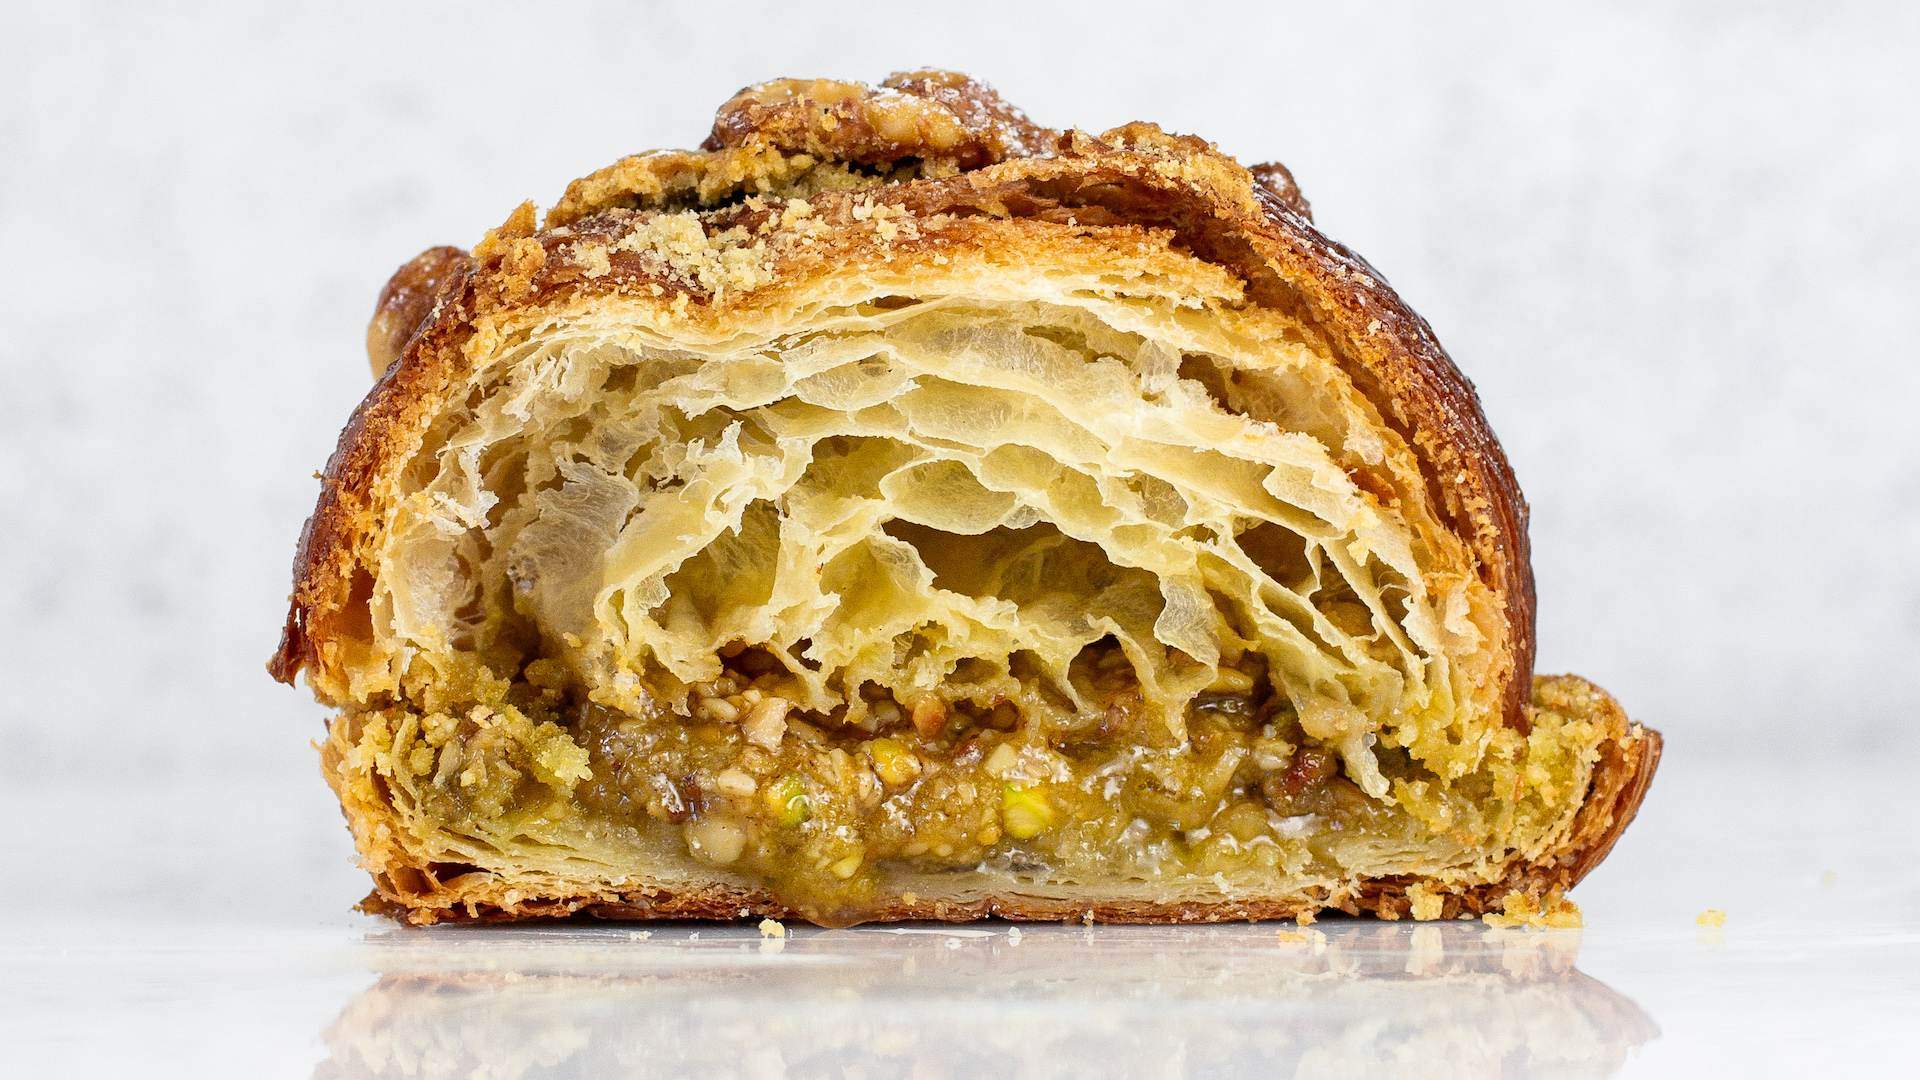 This Baklava Croissant Is Banksia Bakehouse's Latest Genius Limited-Edition Hybrid Dessert